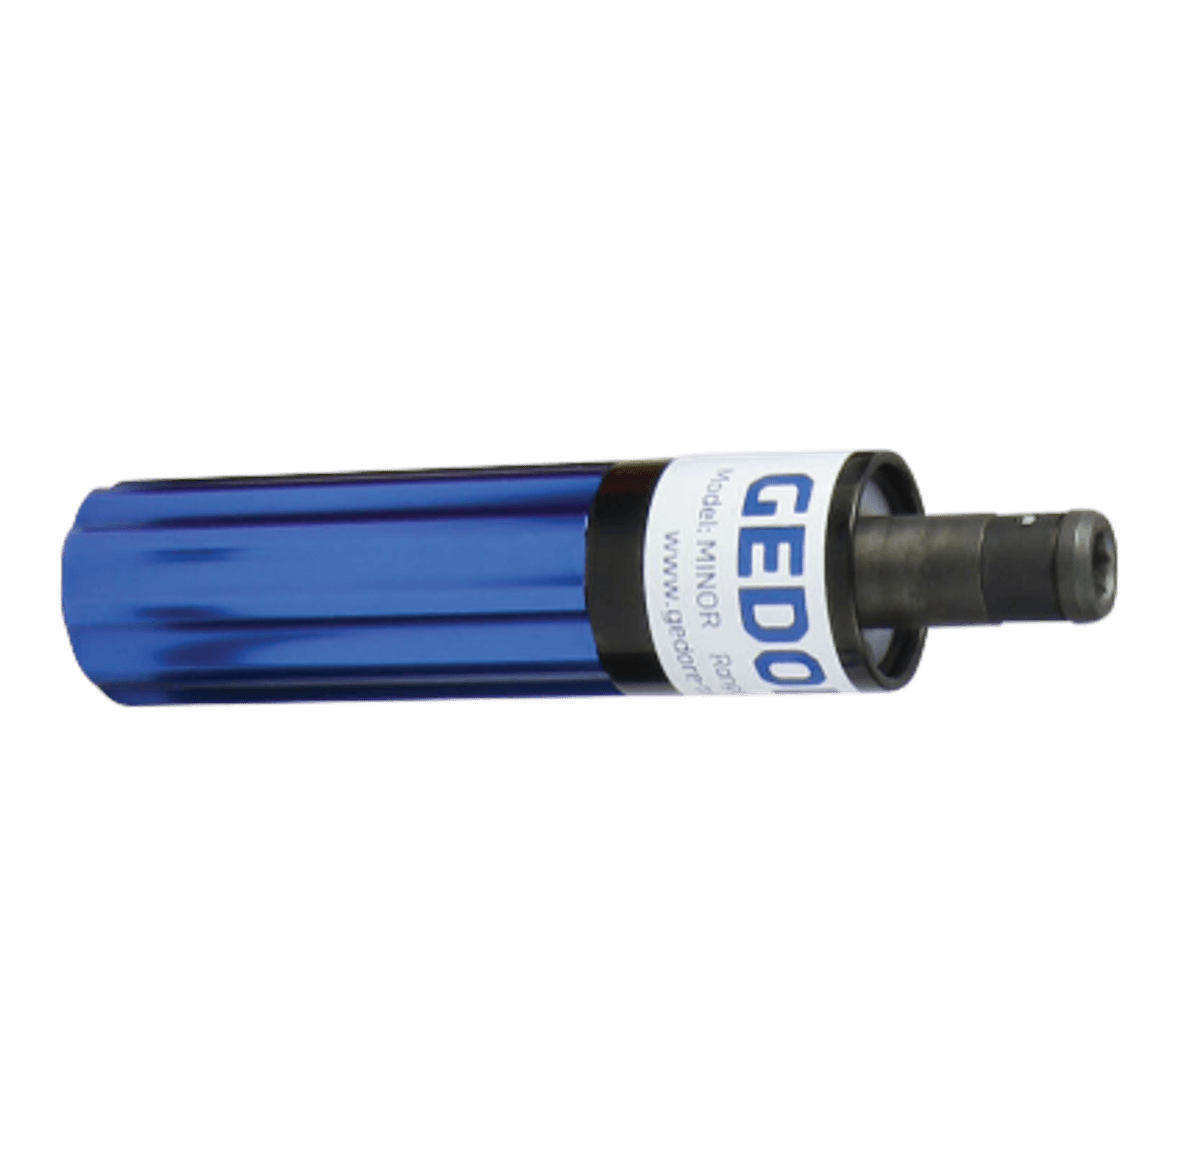 Gedore - Preset Torque Screwdrivers - High Performance Polymer-Plastic Fastener Components